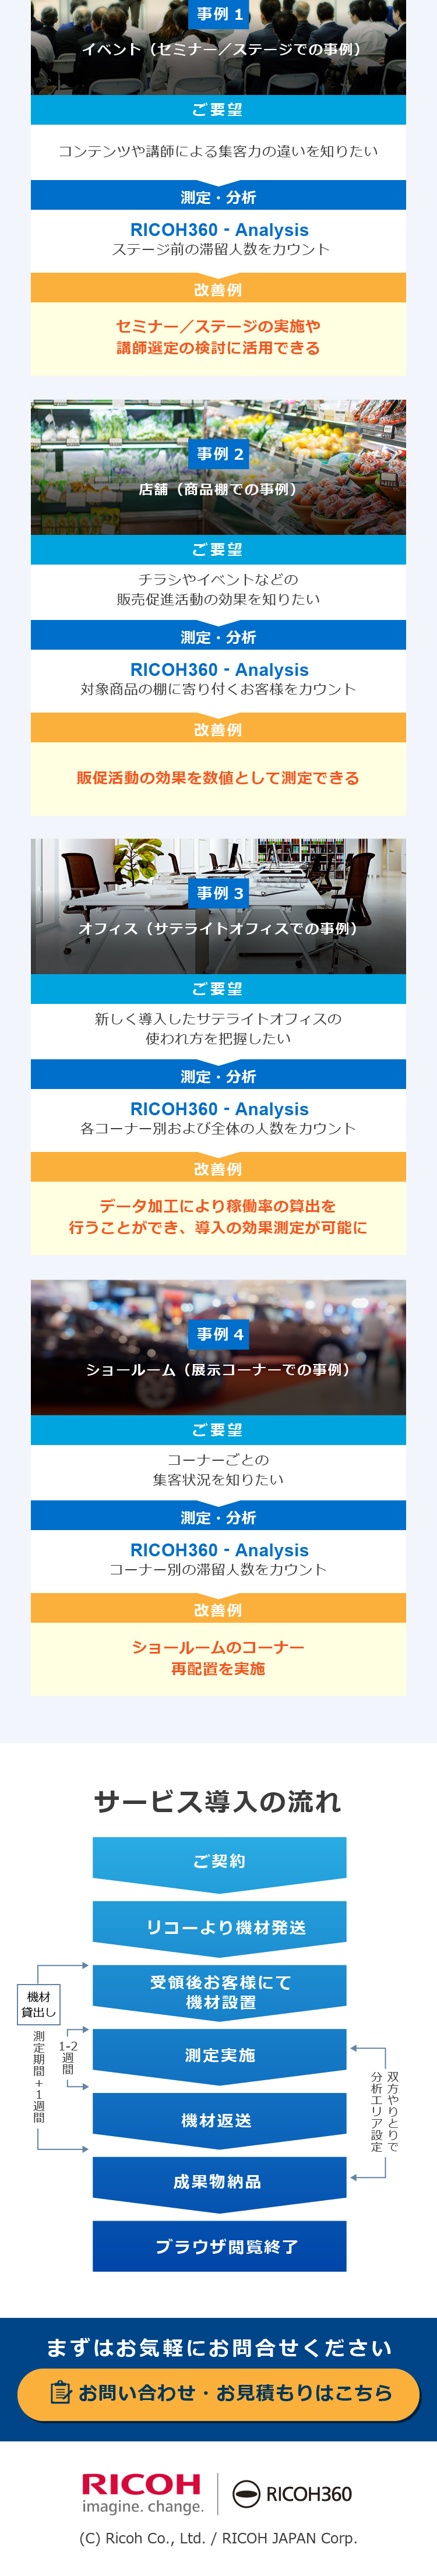 RICOH360-Analysis_sp_2